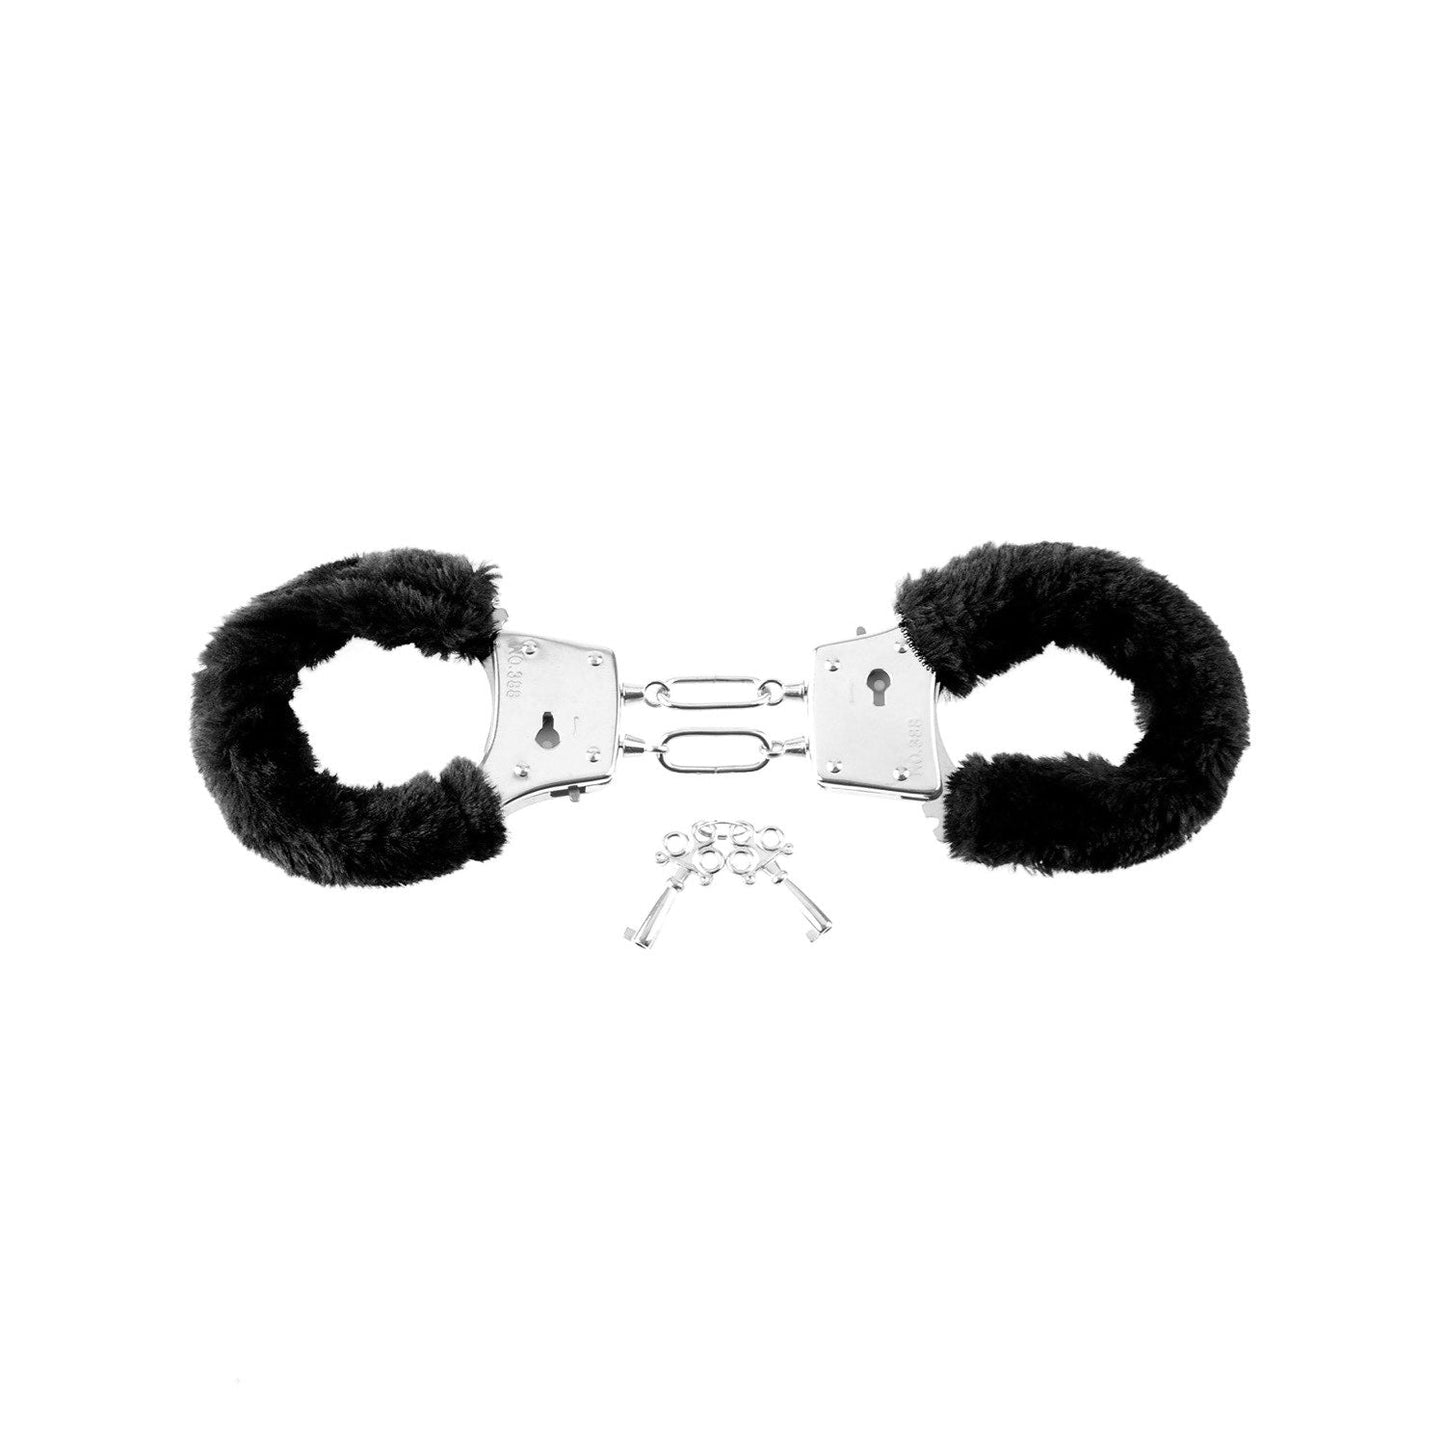 Beginner's Furry Cuffs - Black Fluffy Cuffs